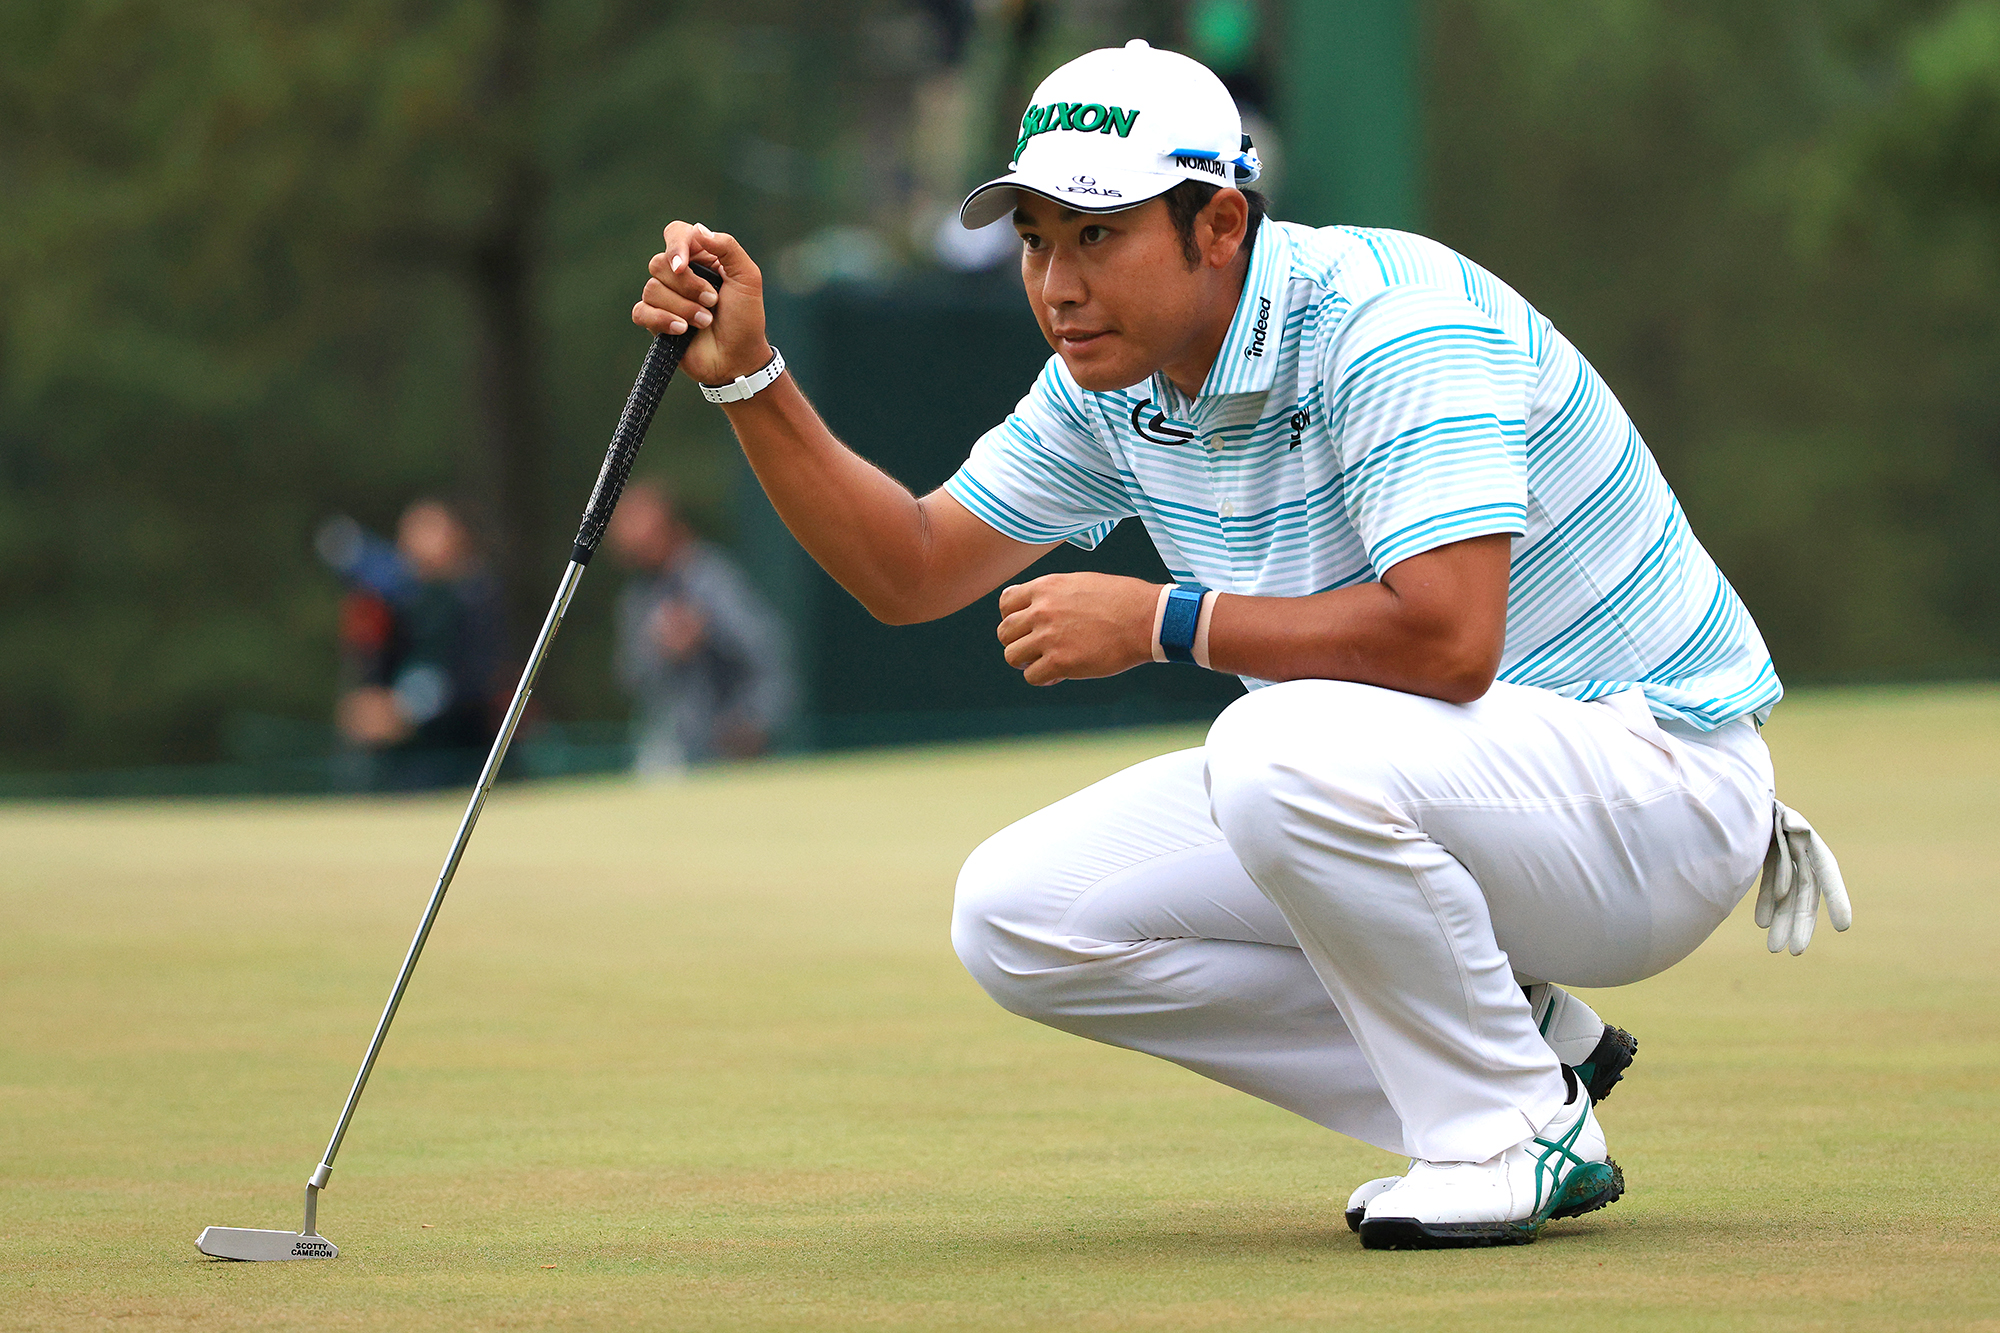 Olympic Golf Gold:  Is Hideki Matsuyama The Favorite To Win It?